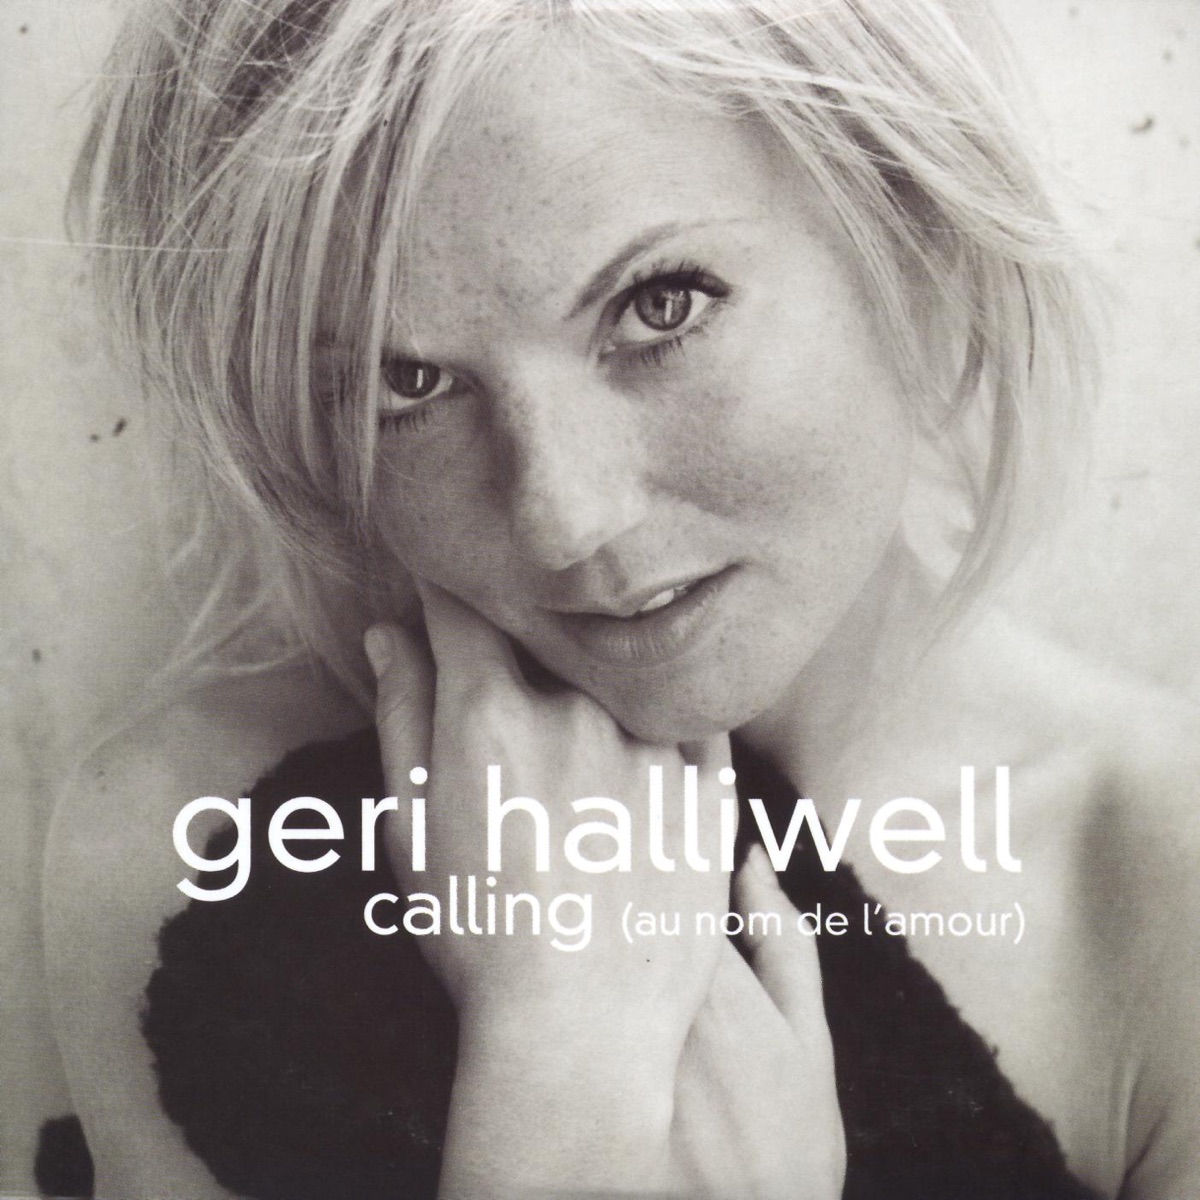 It's Raining Men - Single - Album by Geri Halliwell - Apple Music